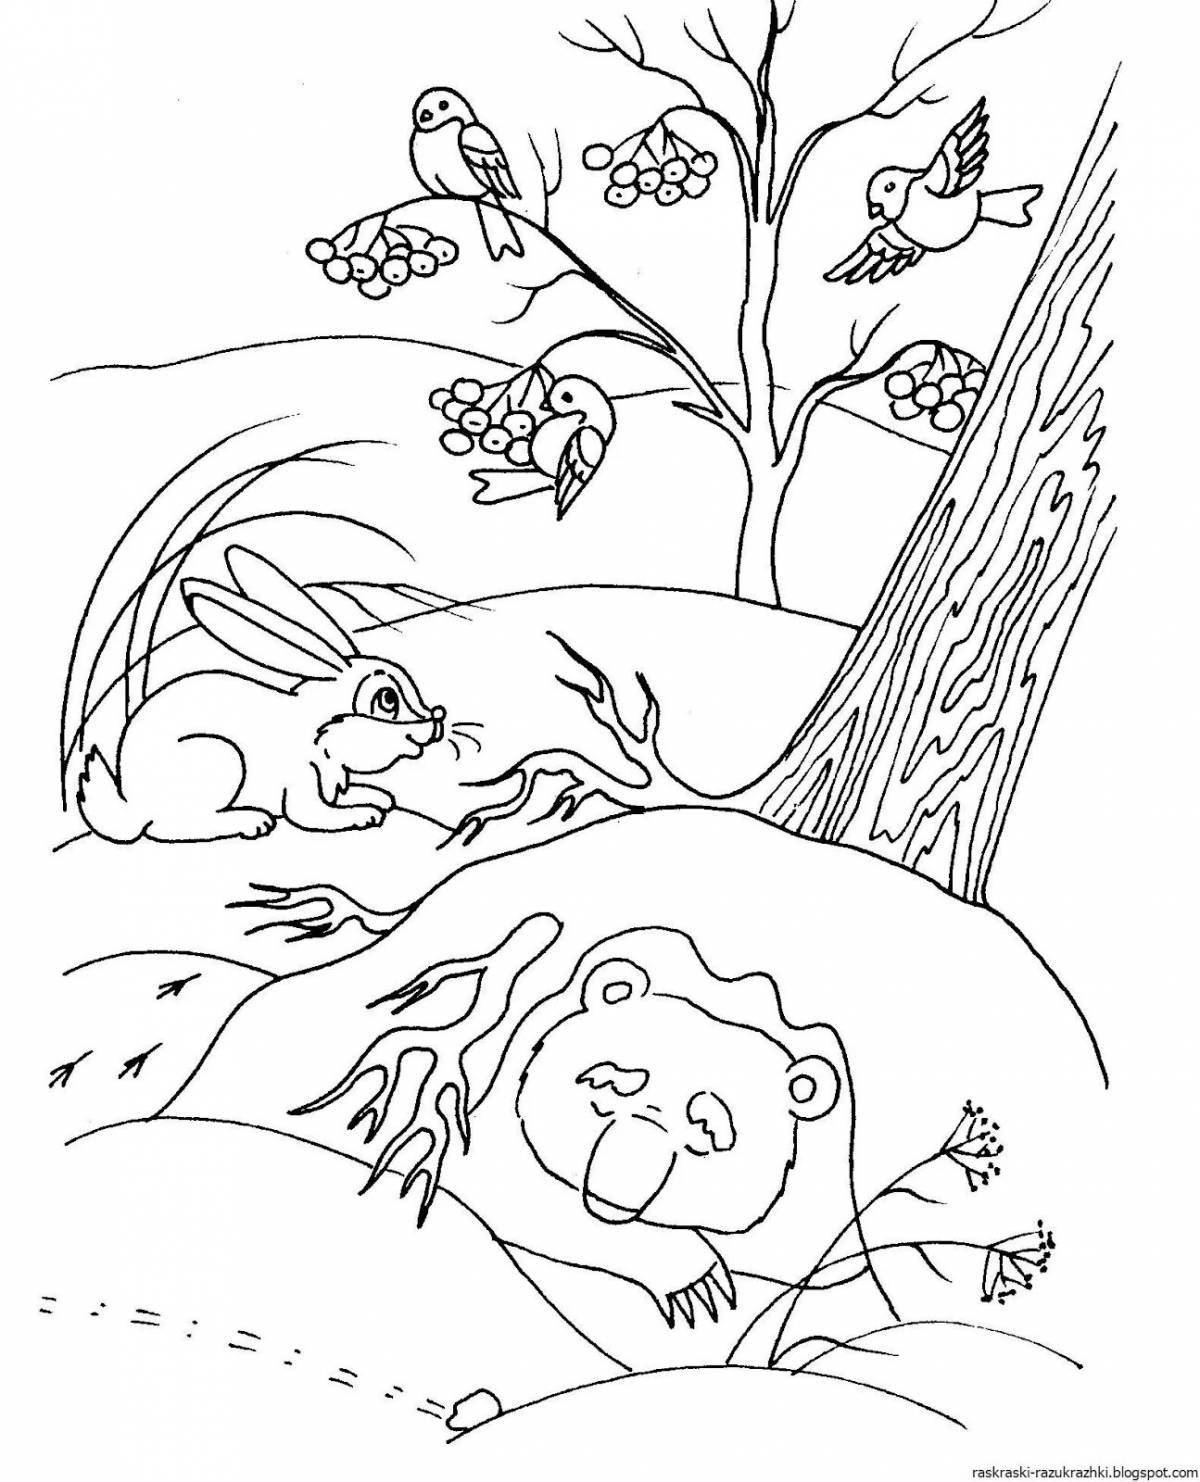 Delightful winter nature coloring book for children